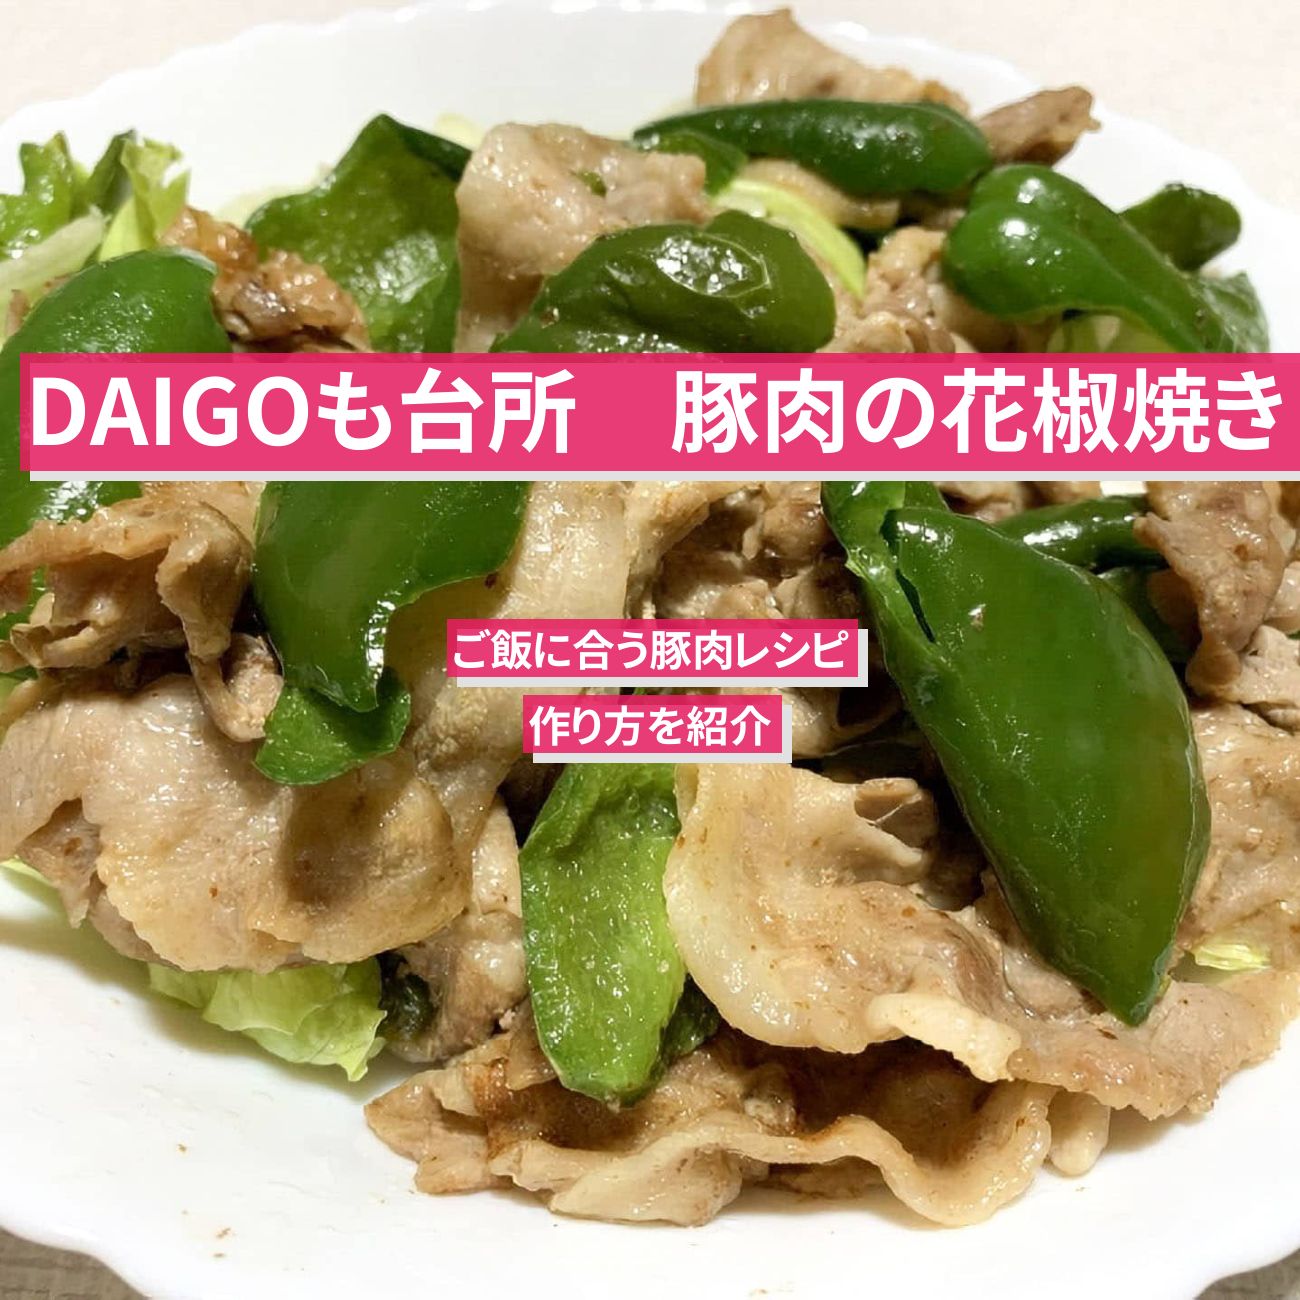 【DAIGOも台所】『豚肉の花椒焼き』のレシピ・作り方を紹介